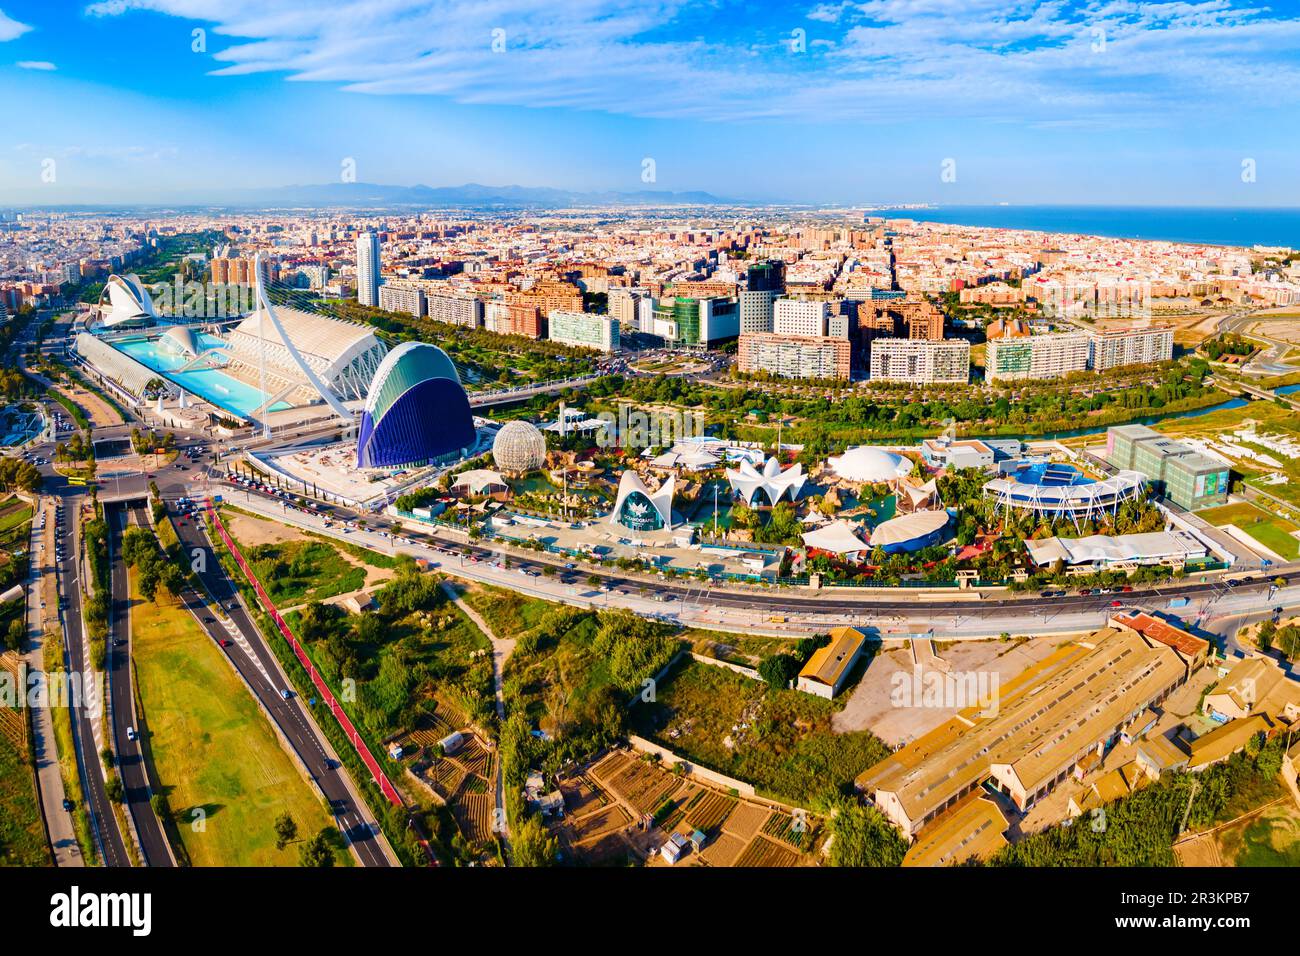 Valencia, Spagna - 15 ottobre 2021: La Città delle Arti e delle Scienze o Ciudad de las Artes y las Ciencias vista panoramica aerea. E' una cultura e un ar Foto Stock